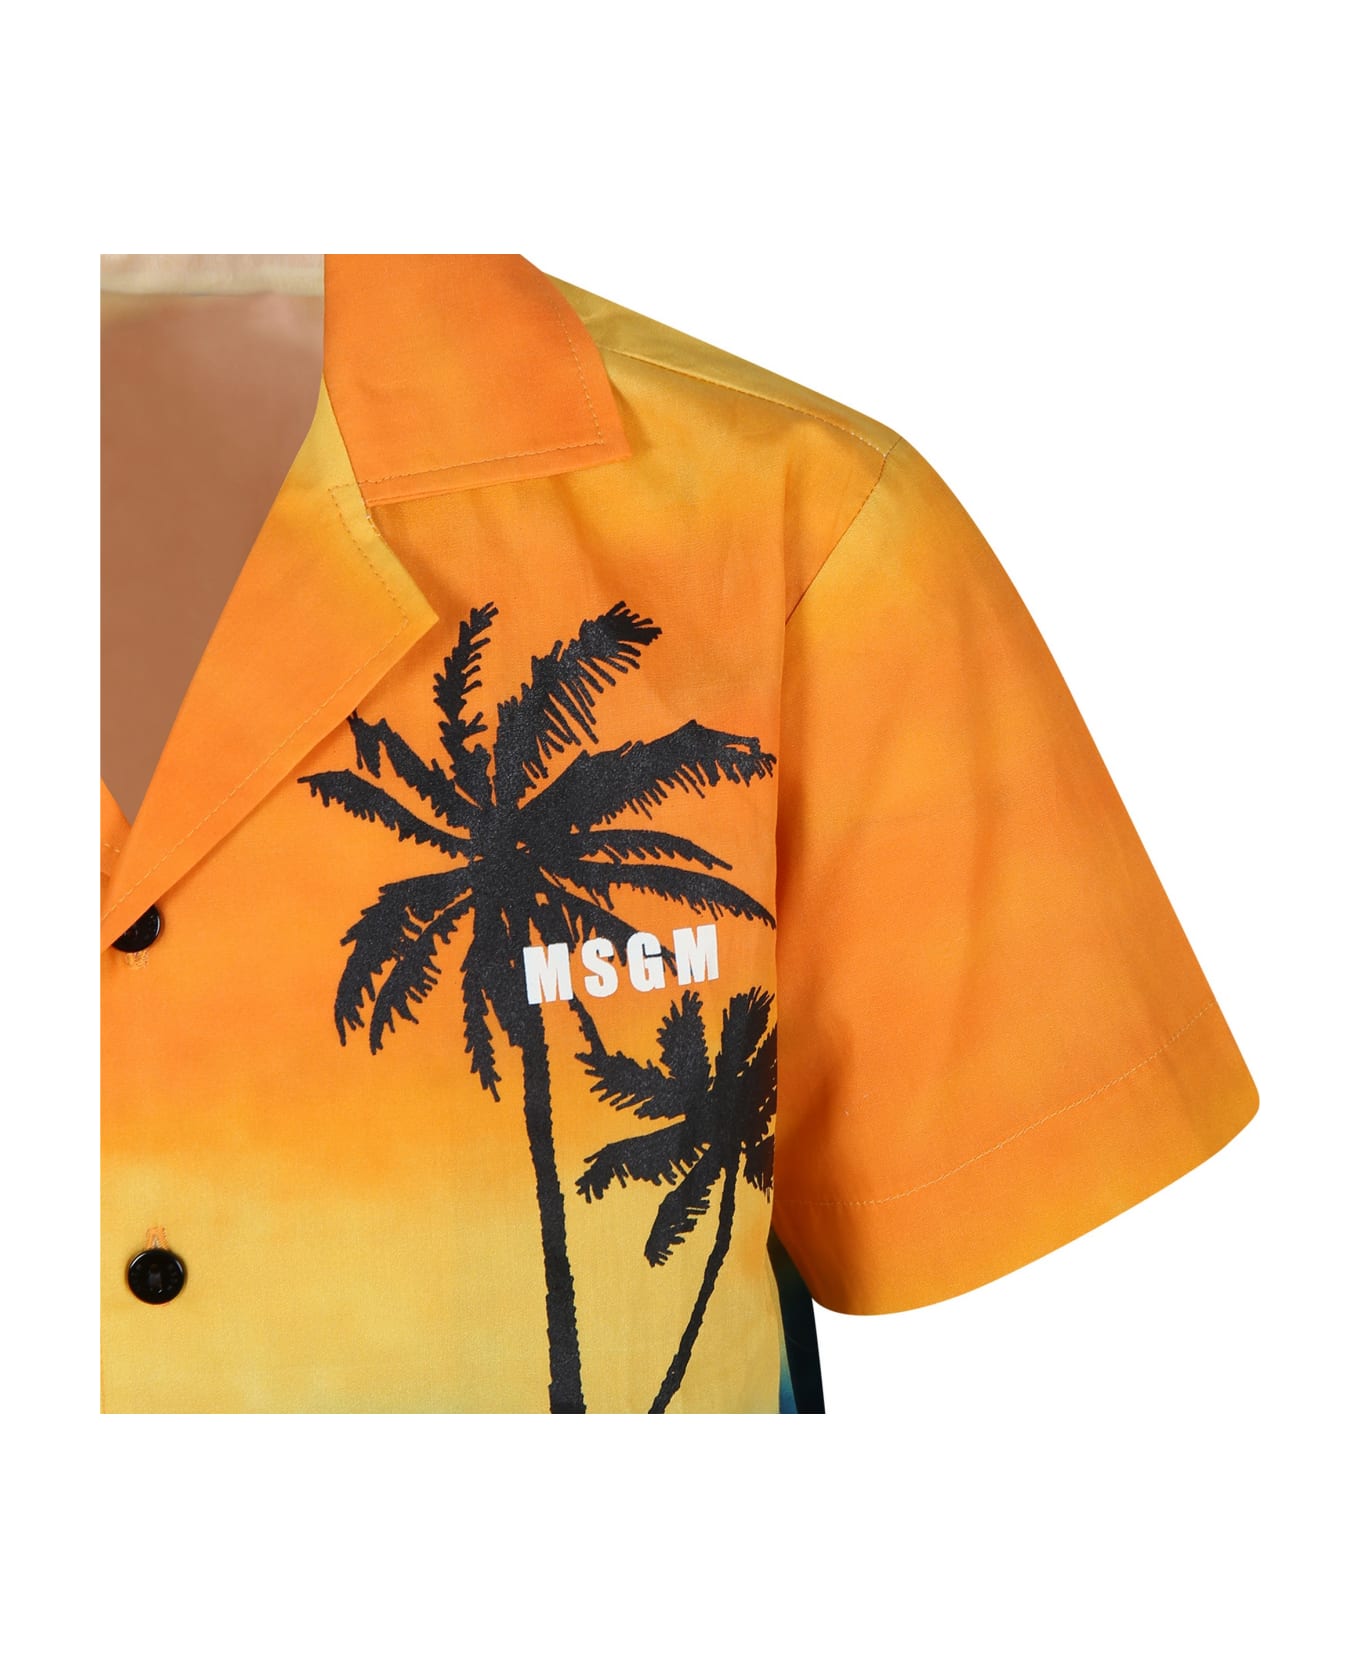 MSGM Orange Shirt For Boy With Palm Tree Print - Orange